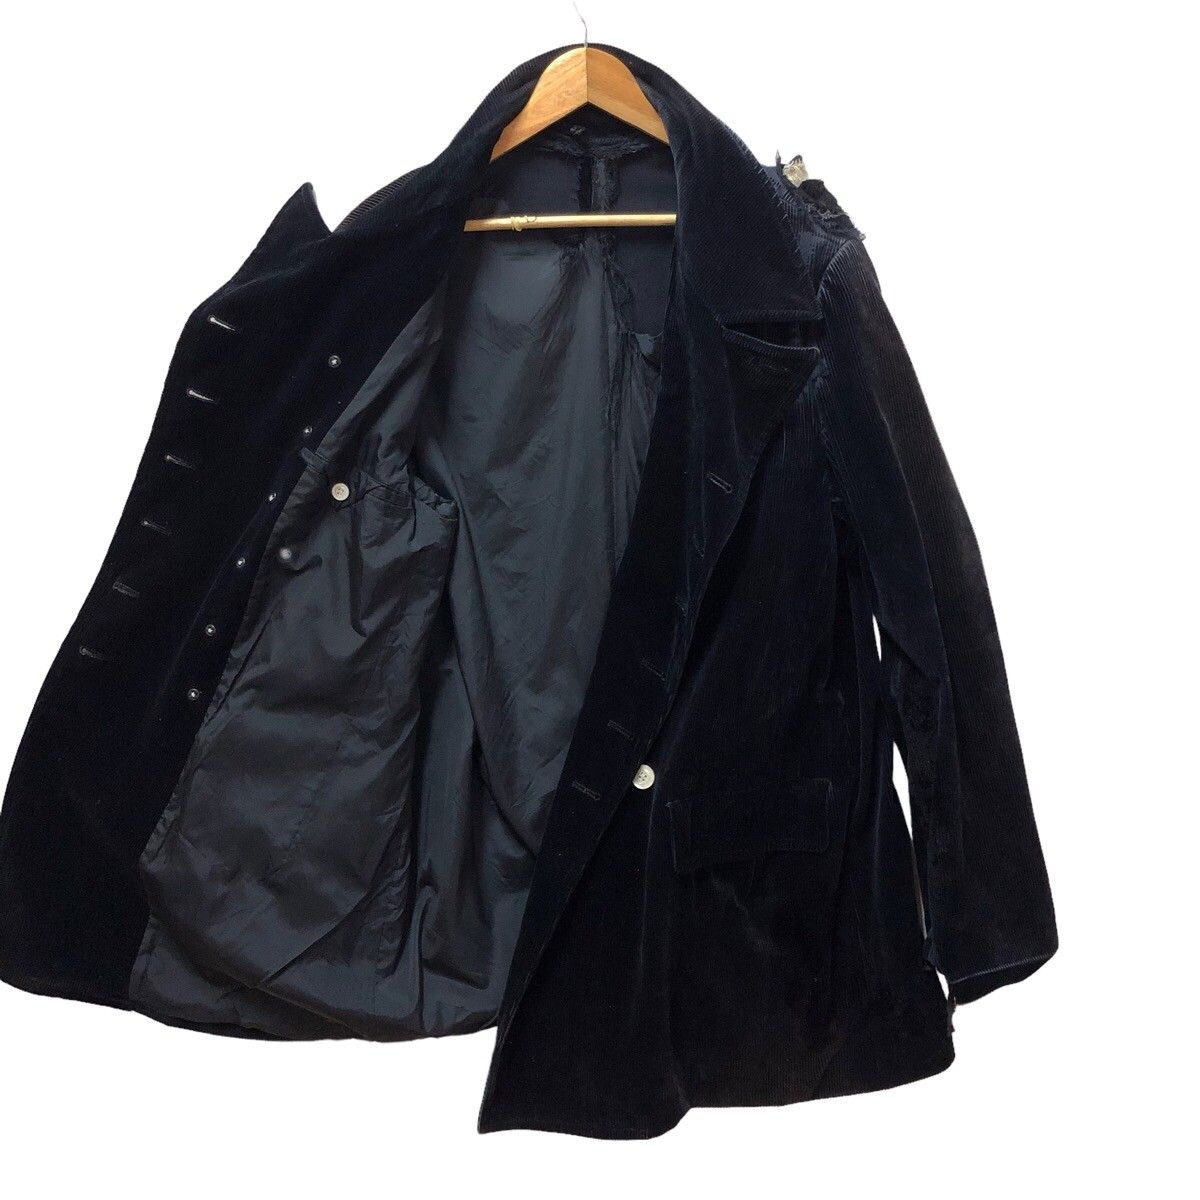 Vintage Yohji Yamamoto pour homme distressed curdoroy coat - 3